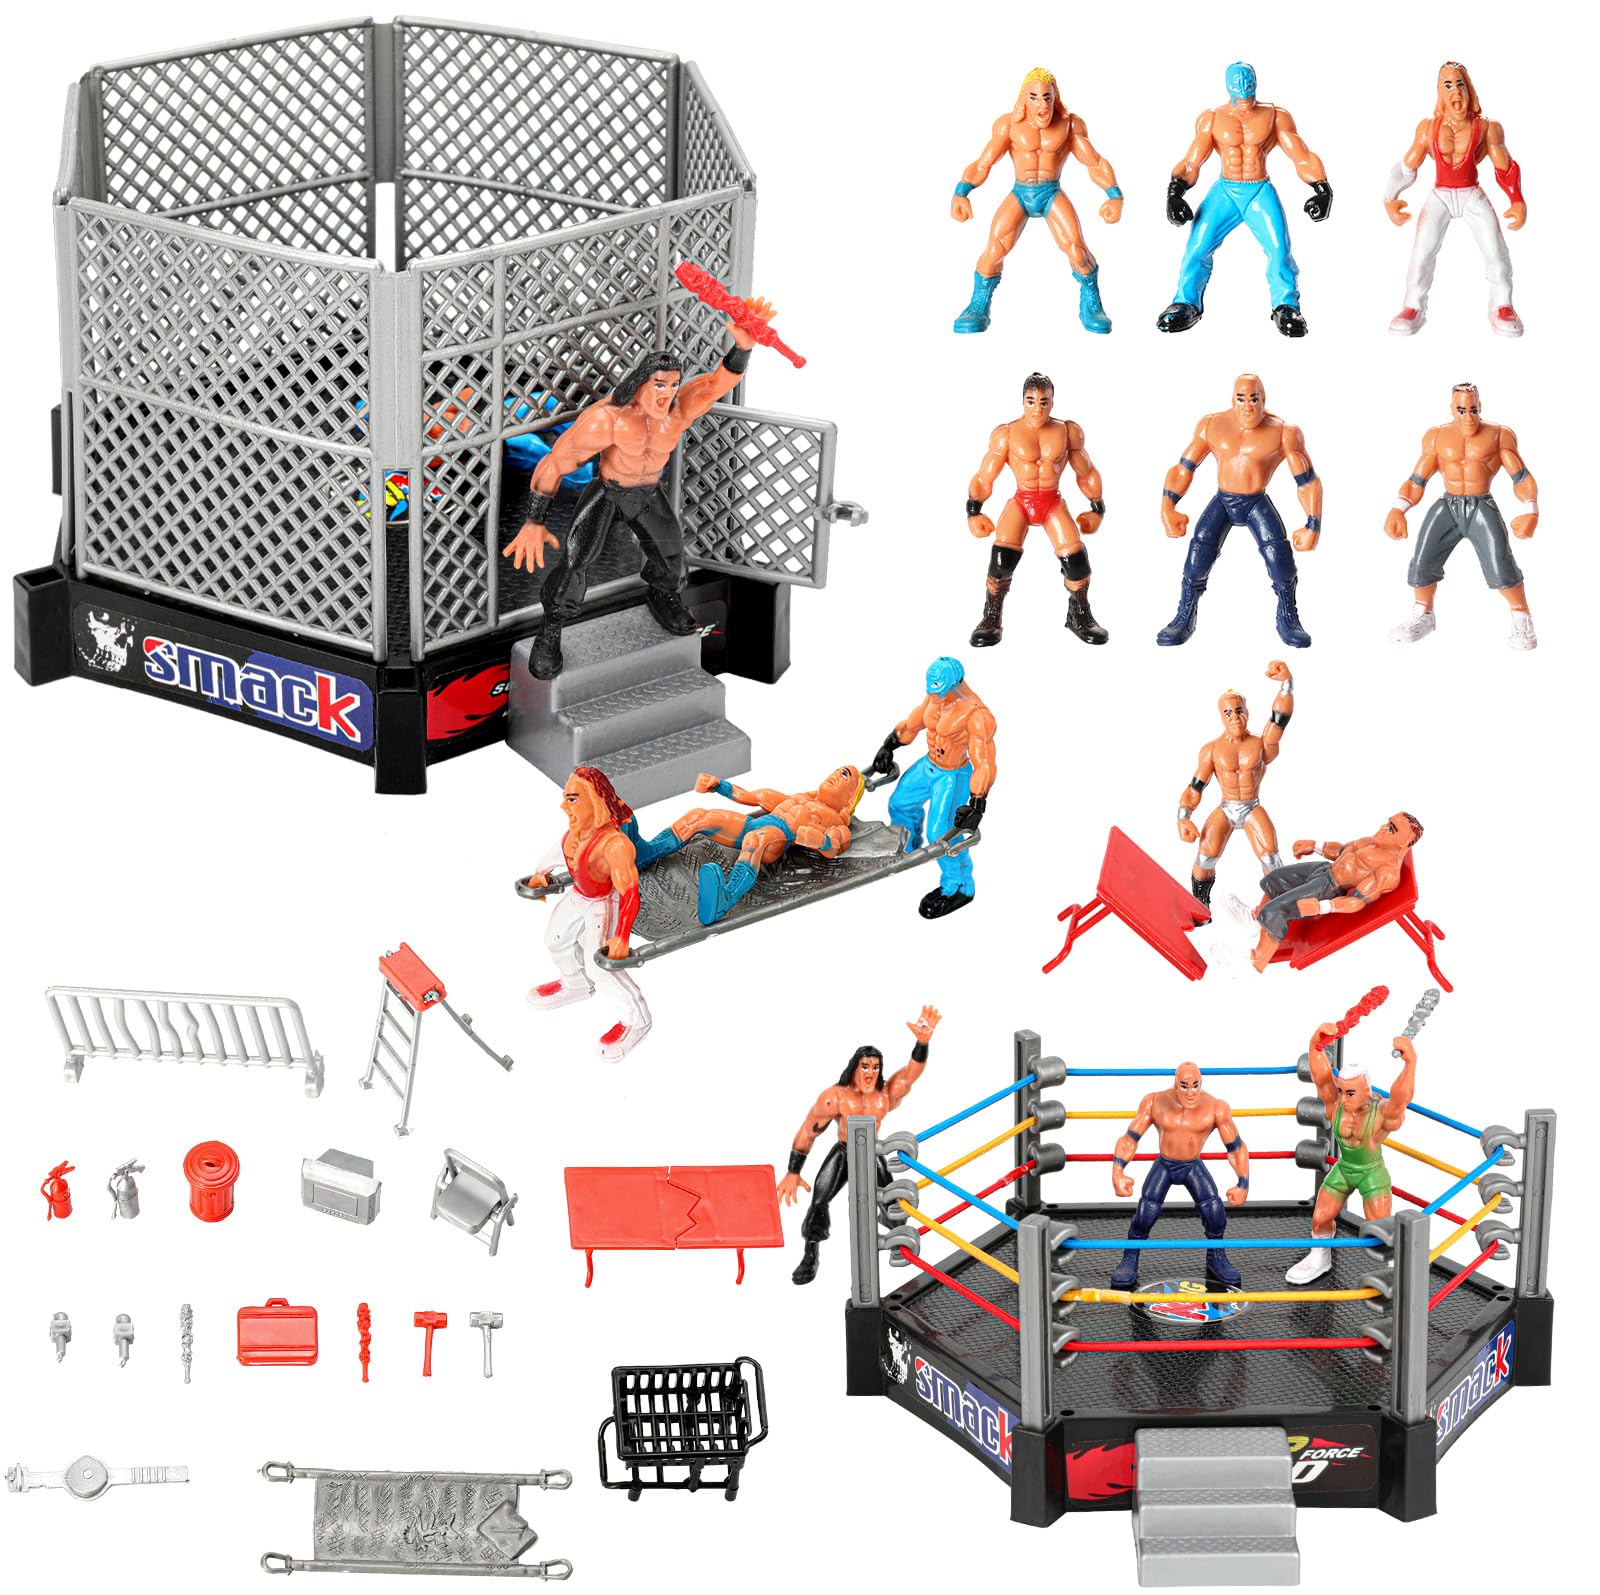 HAPTIME 32 Pcs Wrestling Toys for Kids, Mini Wrestlers Playset with 12 Wrestling Action Figures, 2 Wrestling Ring, Many Realisti